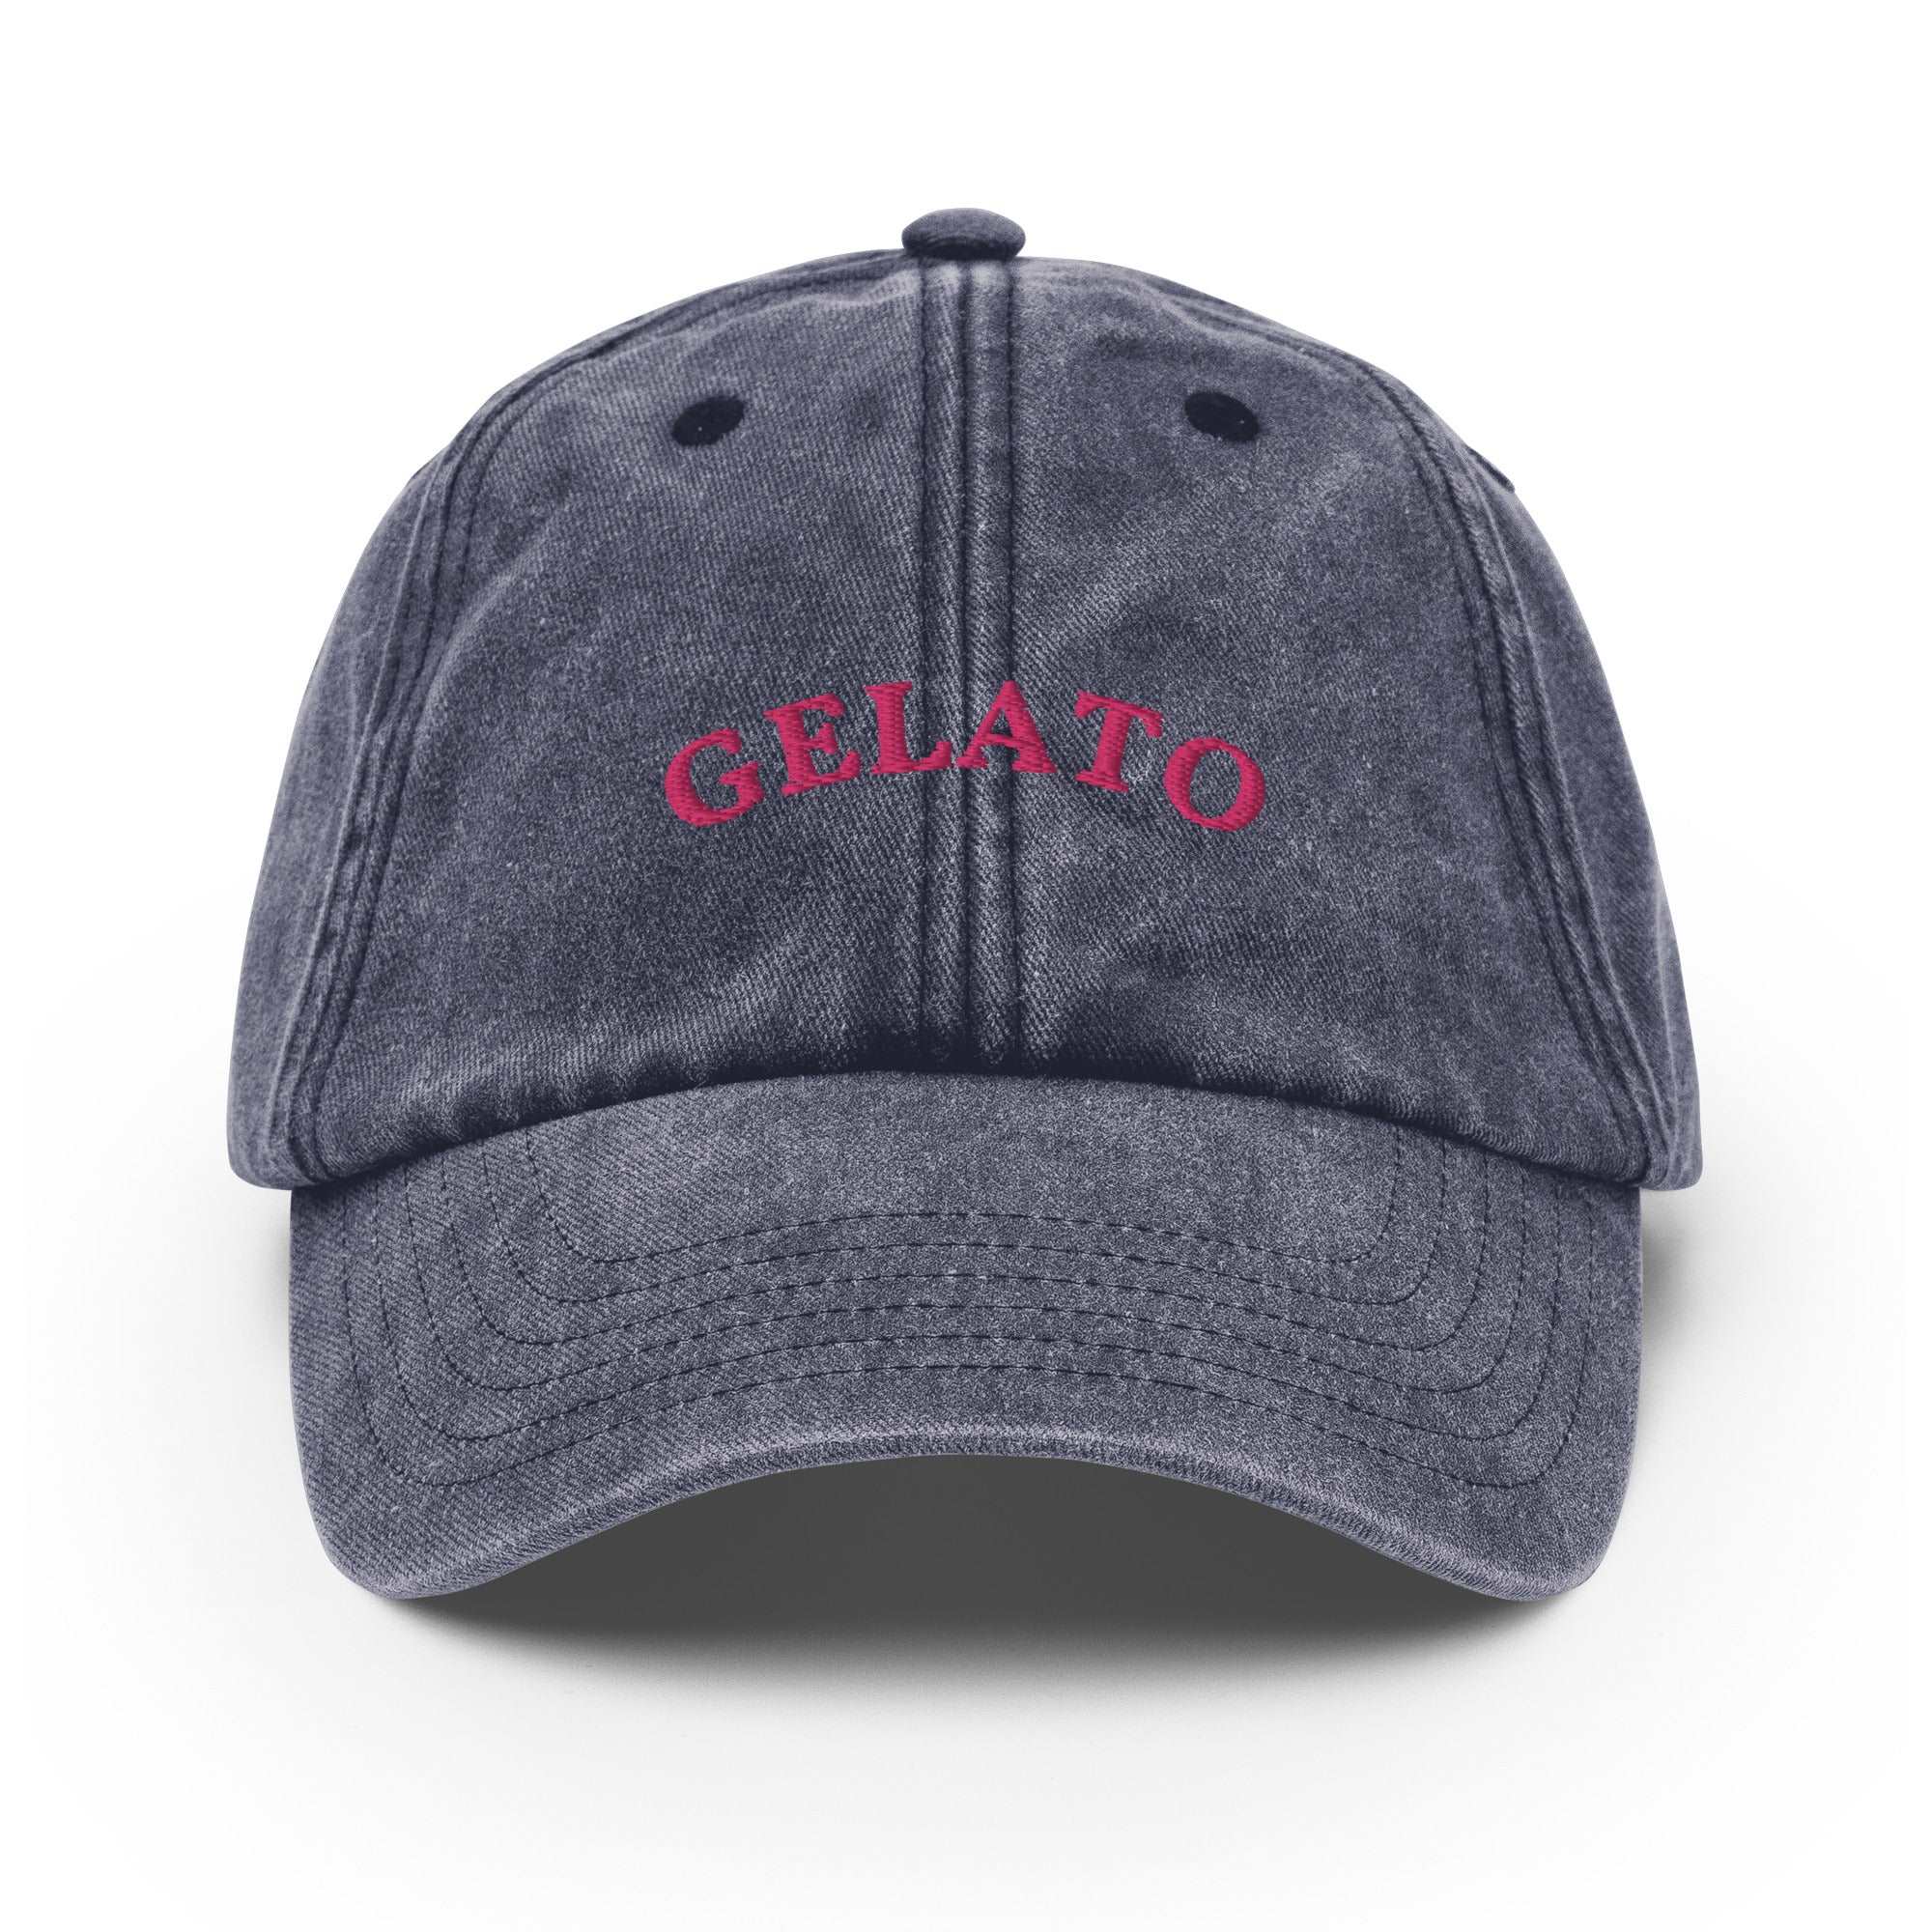 Gelato Vintage Cap - The Refined Spirit